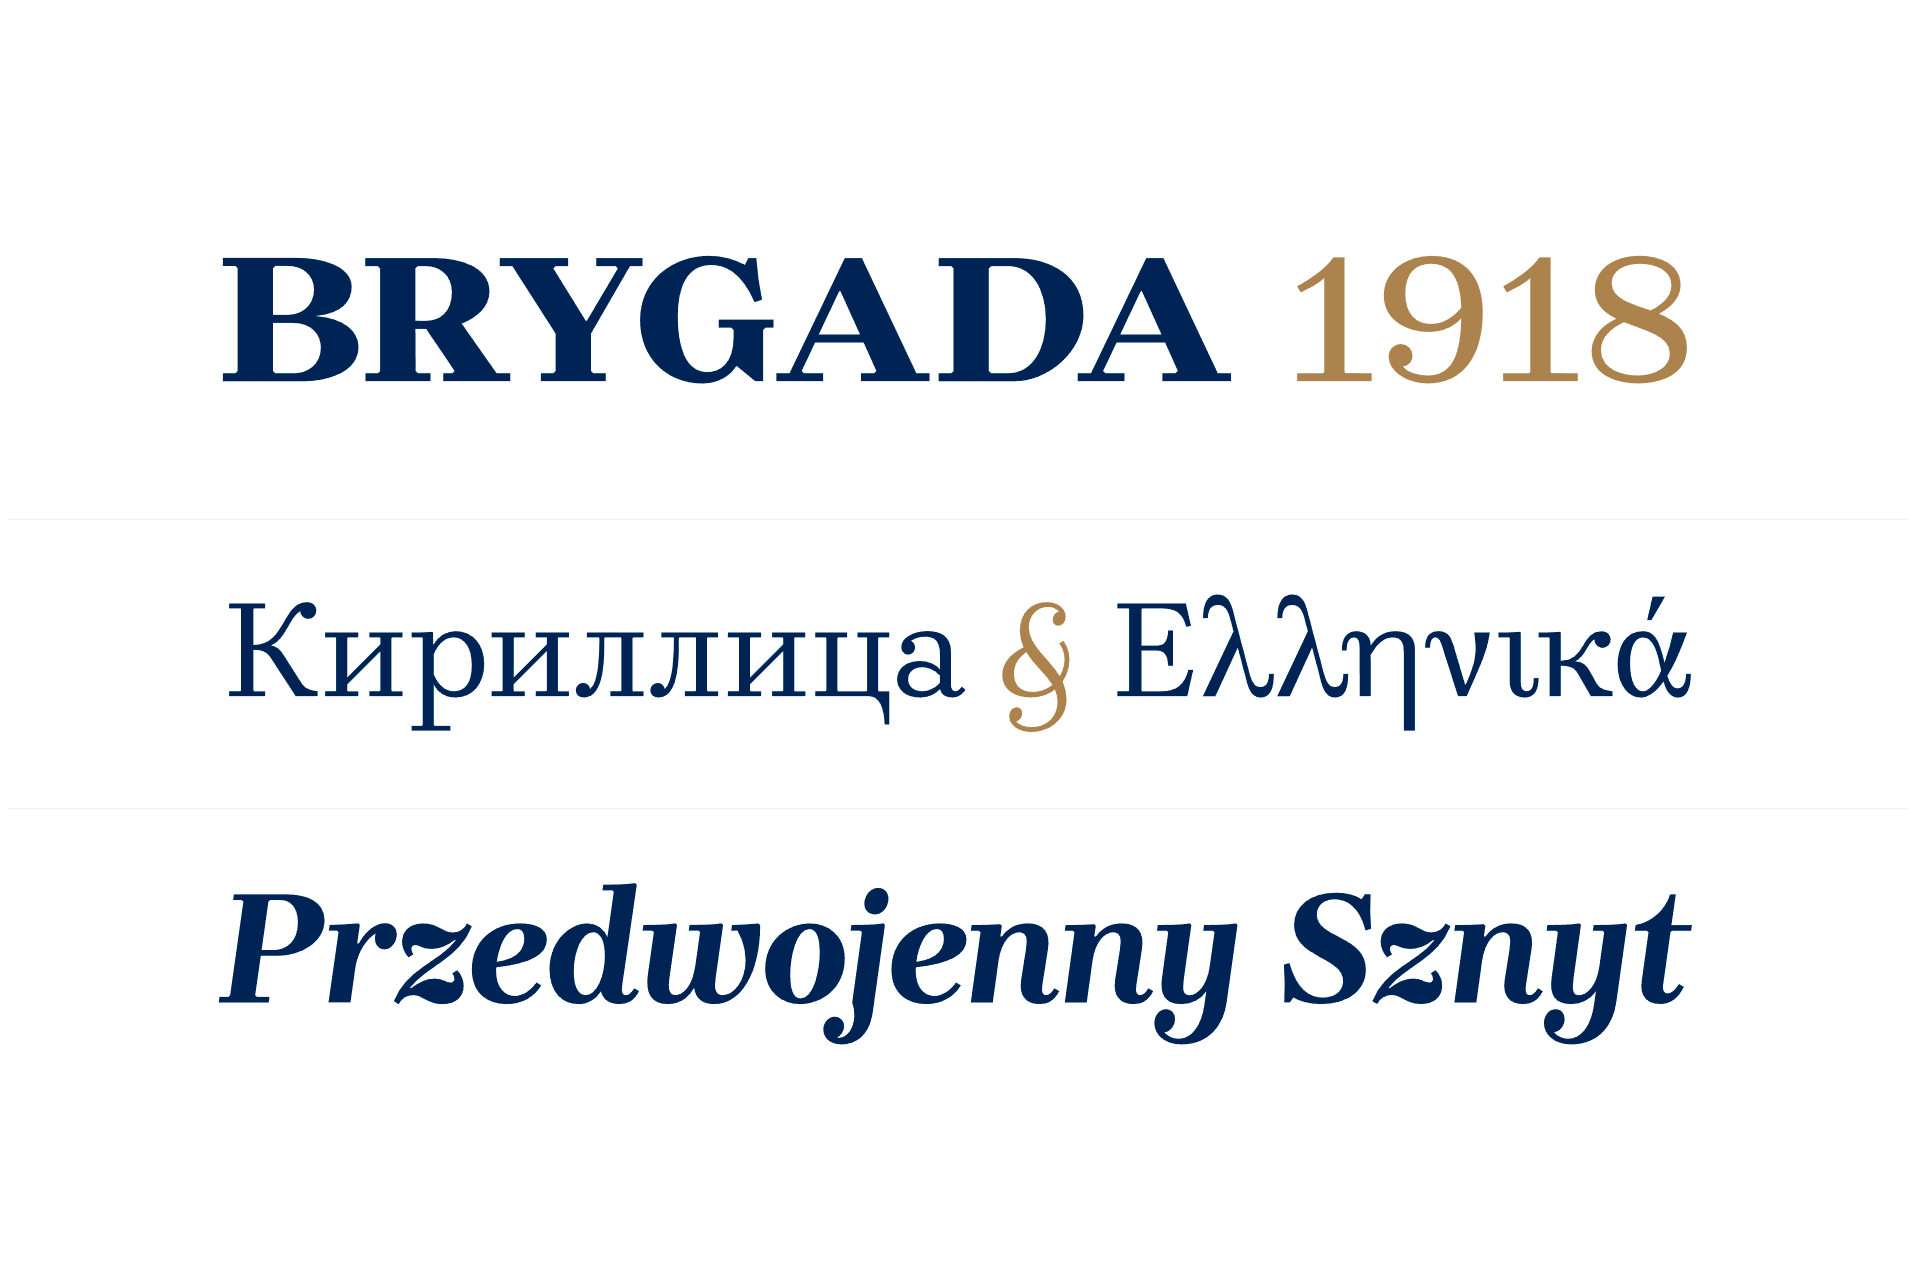 Font Brygada 1918. Шрифт 1918. Шрифт 1918 года. Красивые шрифты фигма на русском.